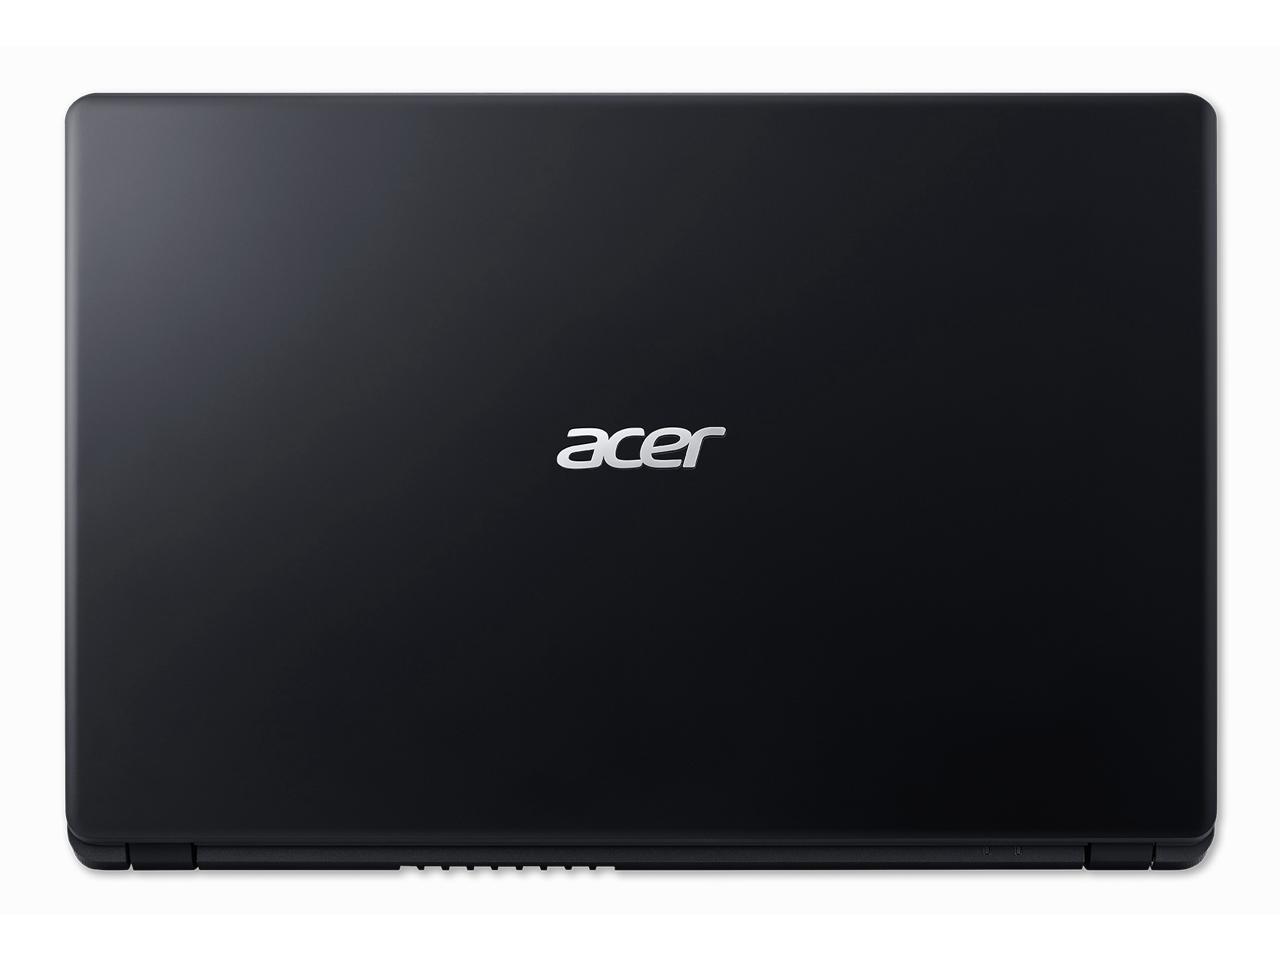 Acer Aspire 3 - 15.6" Laptop Intel Core i5-1035G1 1GHz 8GB Ram 256GB SSD Windows 10 Home